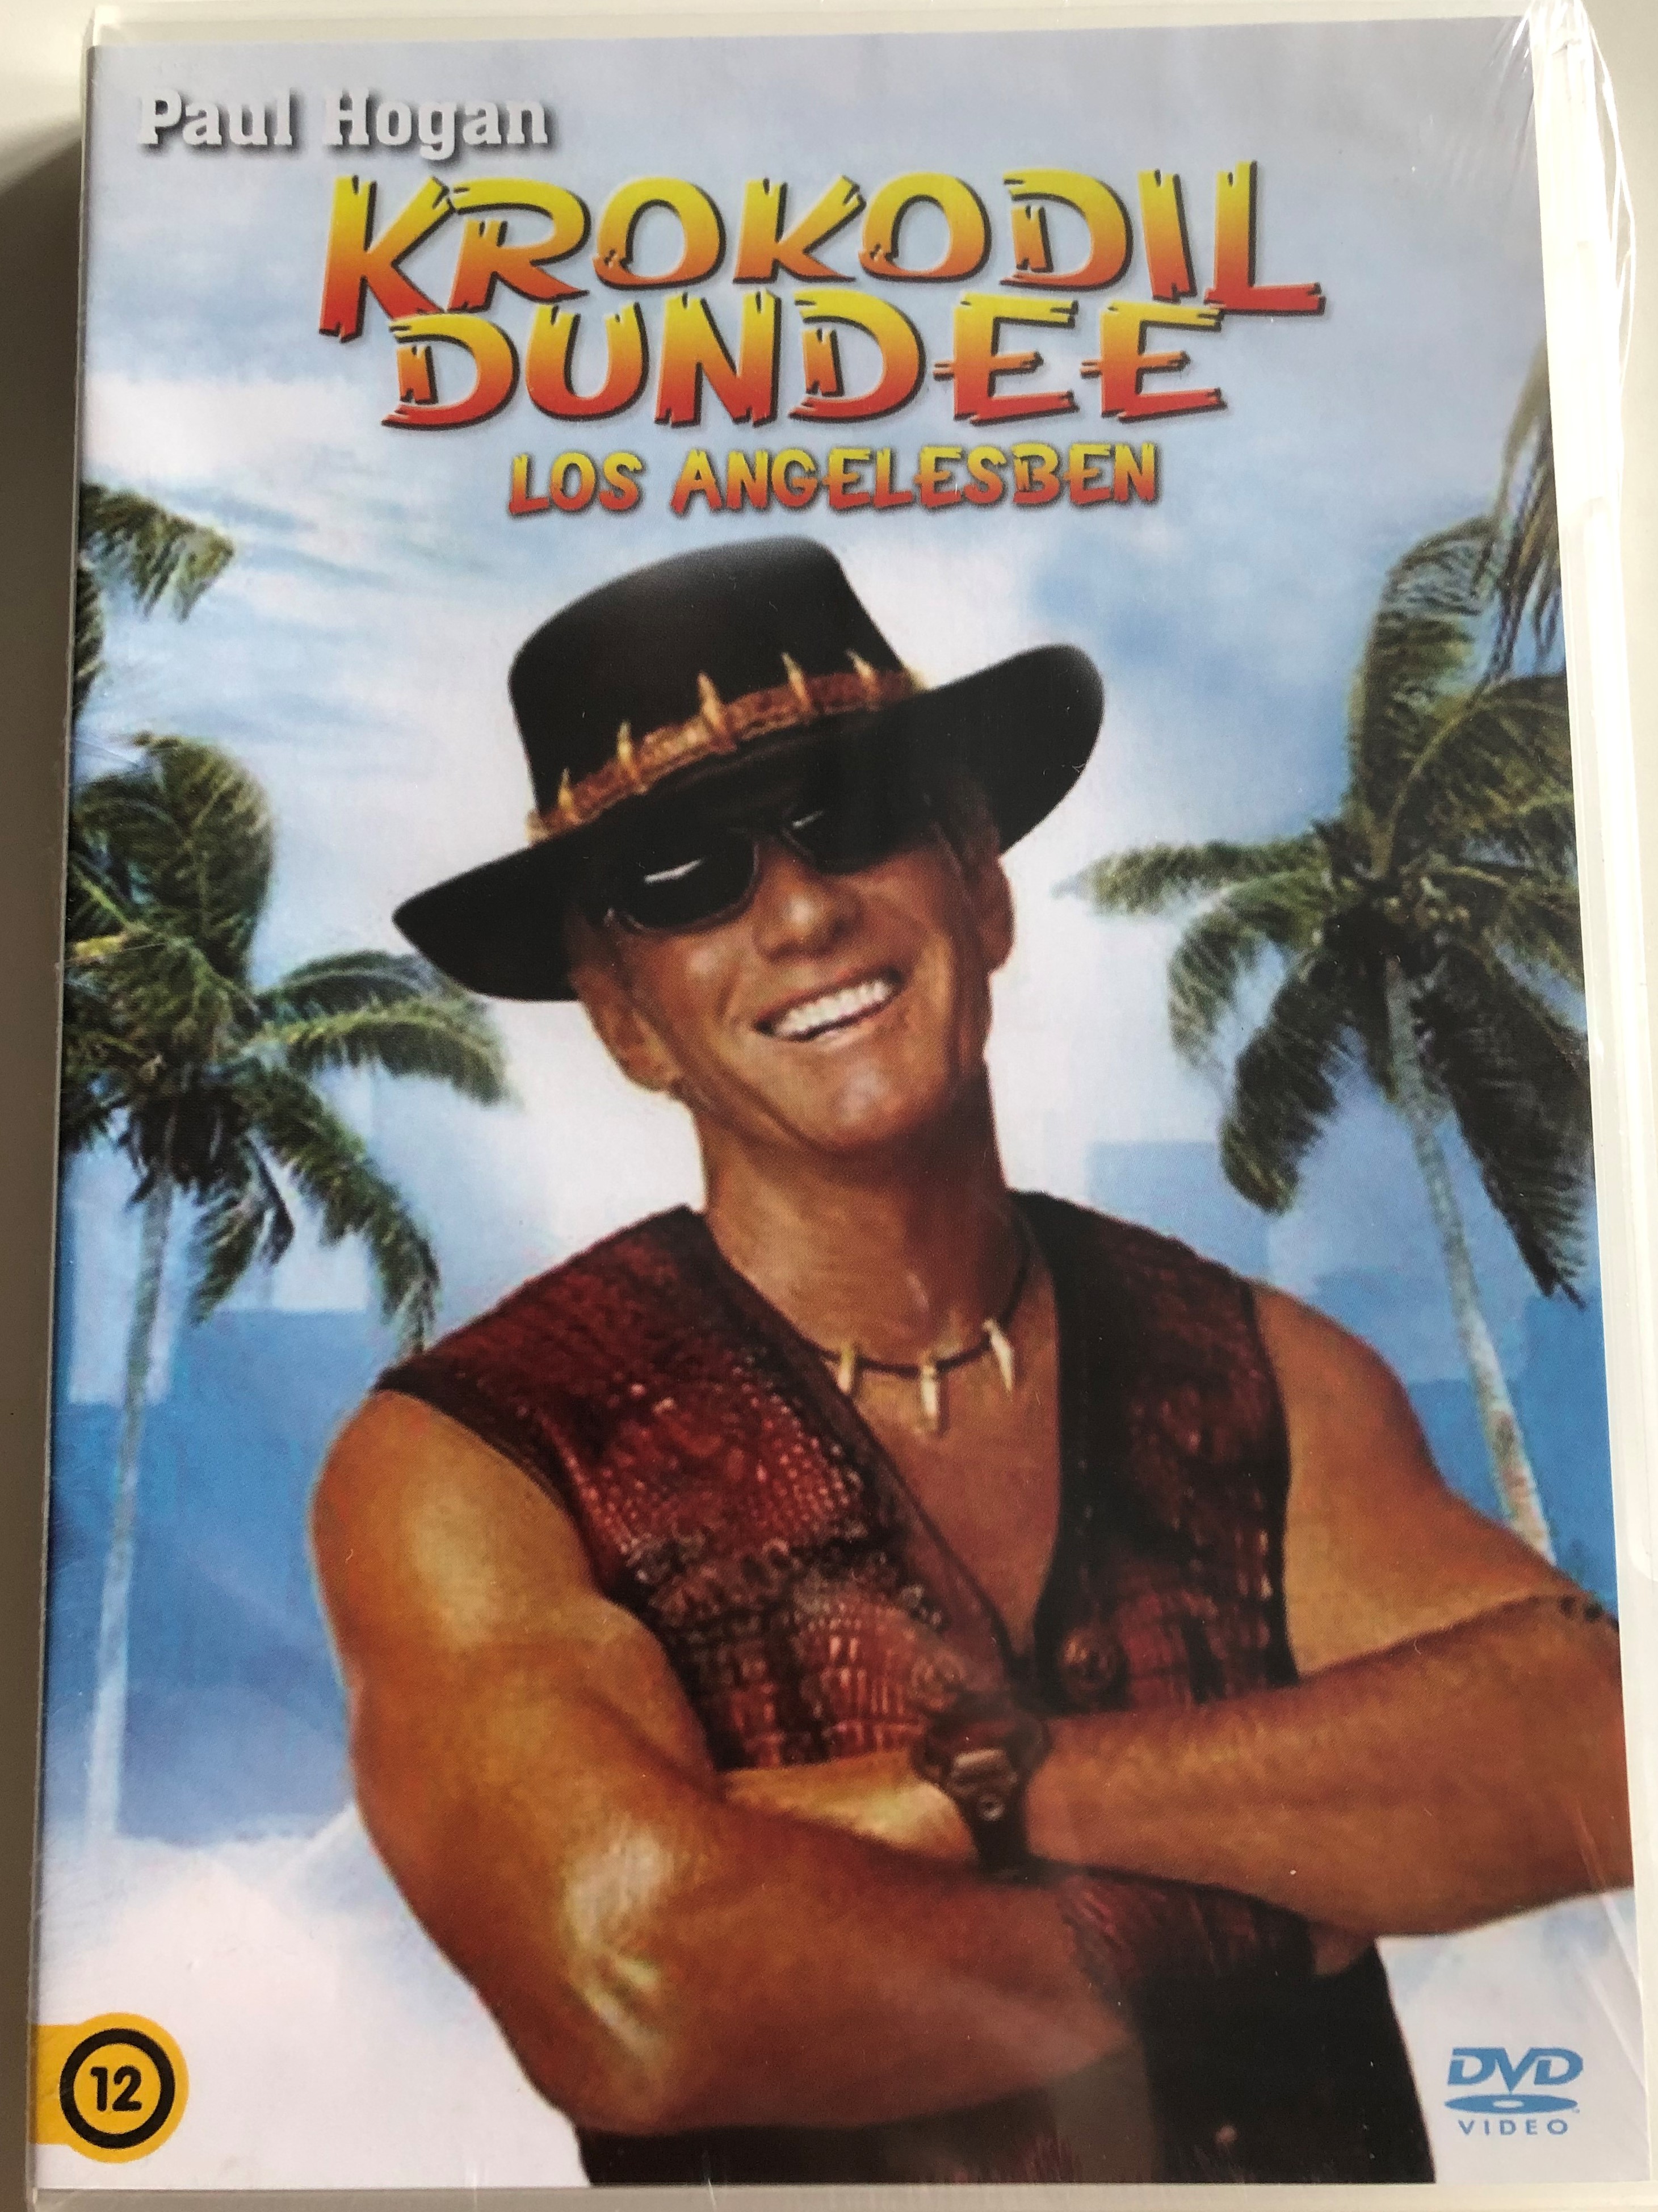 Crocodile Dundee in Los Angeles DVD 2001 Krokodil Dundee Los Angelesben /  Directed by Simon Wincer / Starring: Paul Hogan, Linda Kozlowski, Jere  Burns, Jonathan Banks - bibleinmylanguage